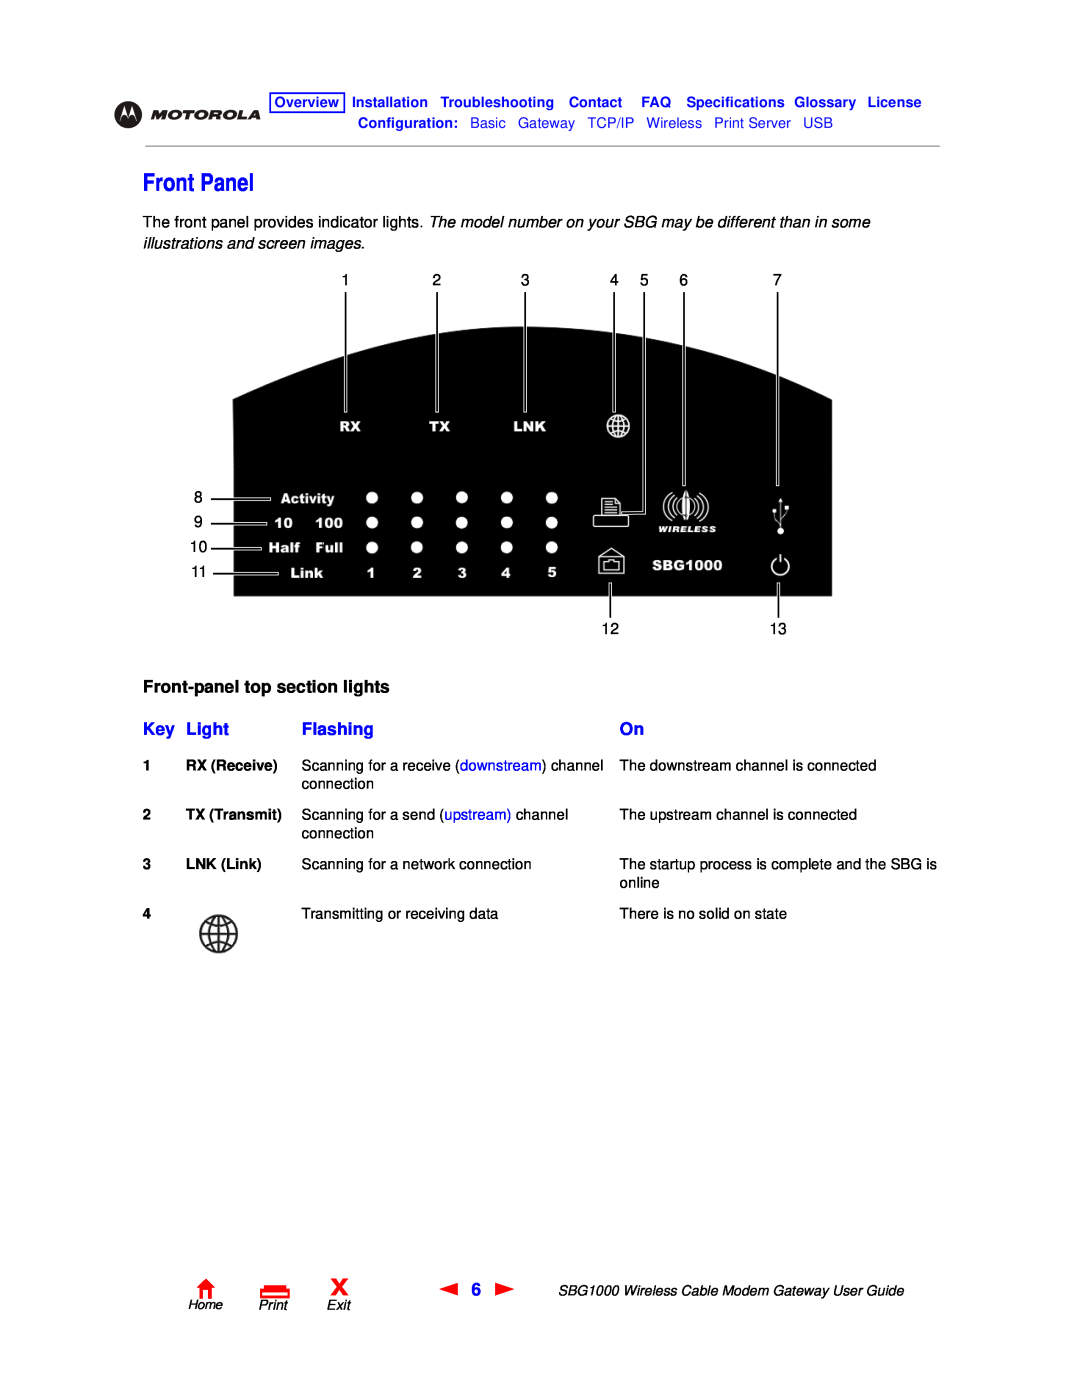 Motorola SBG1000 manual Front Panel, Front-panel top section lights, Light, Flashing, Home Print Exit 